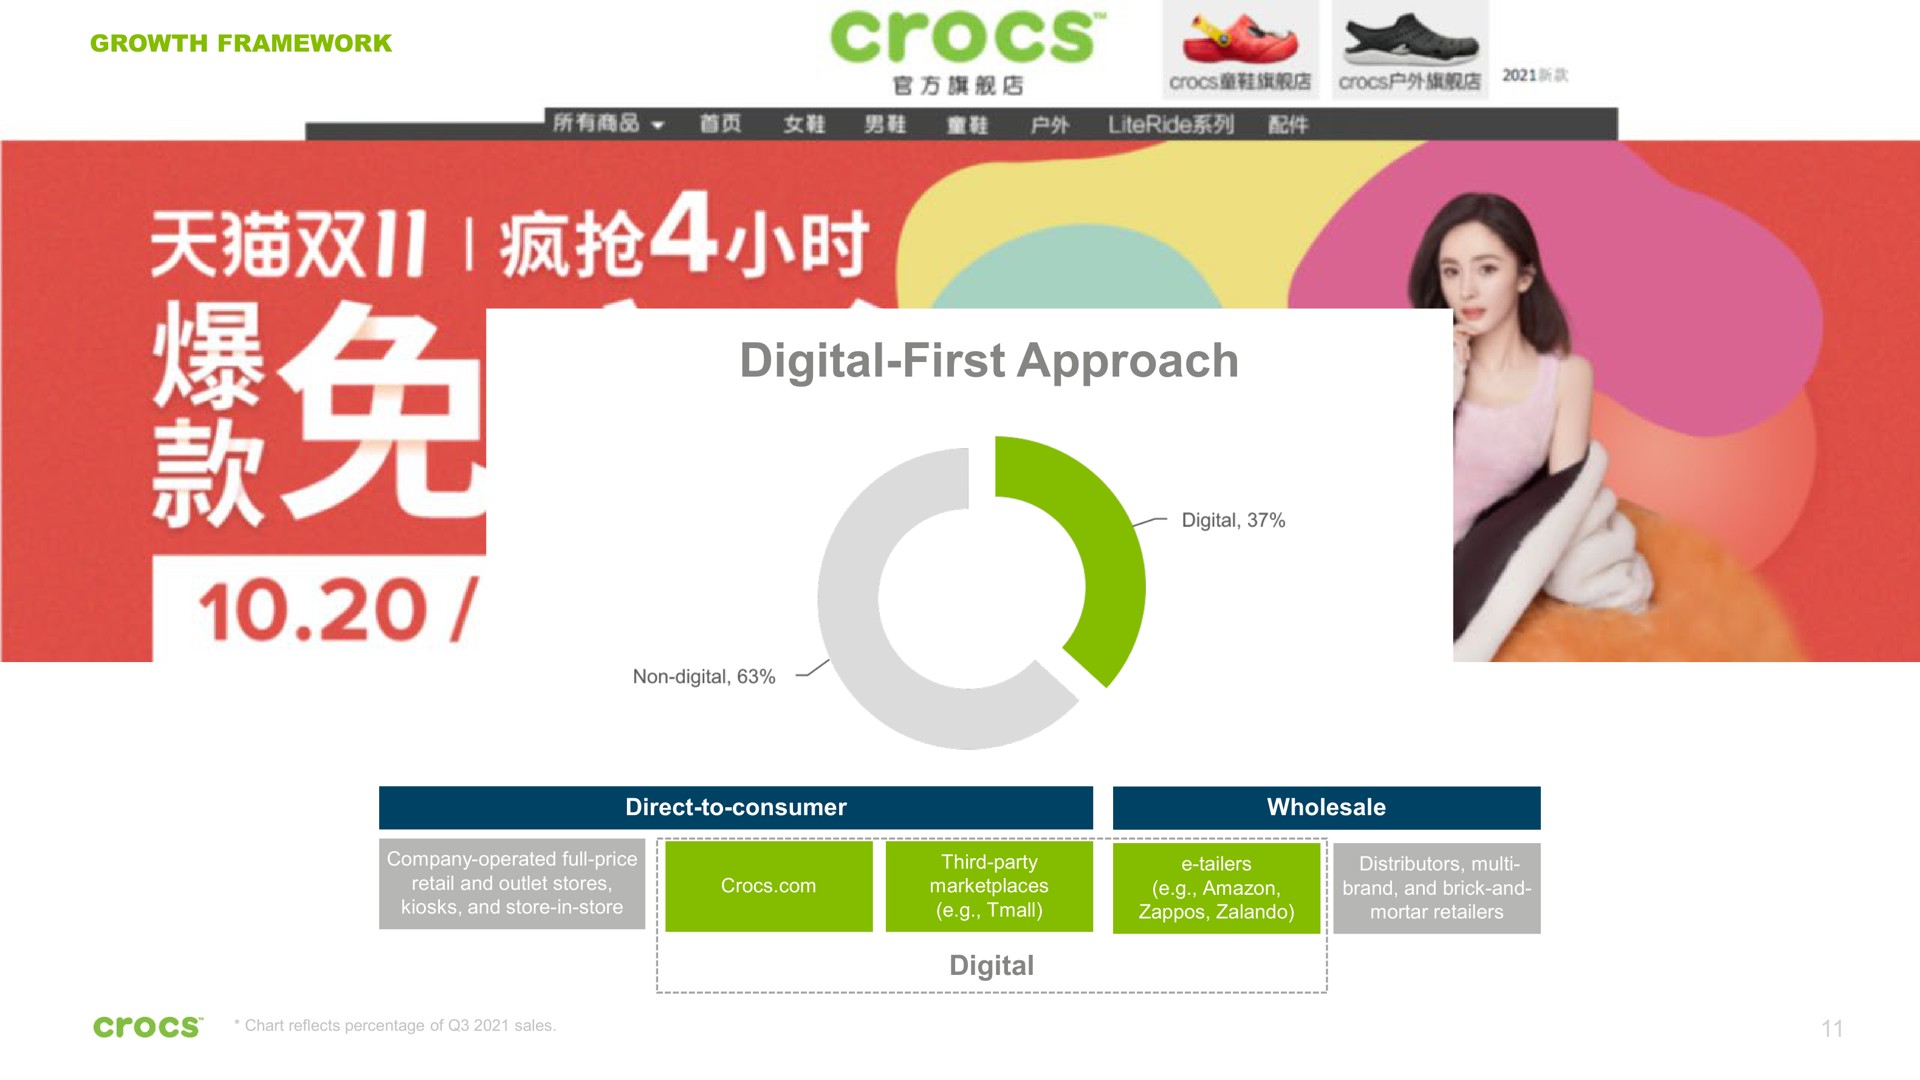 digital first approach growth framework ait paho on | Crocs